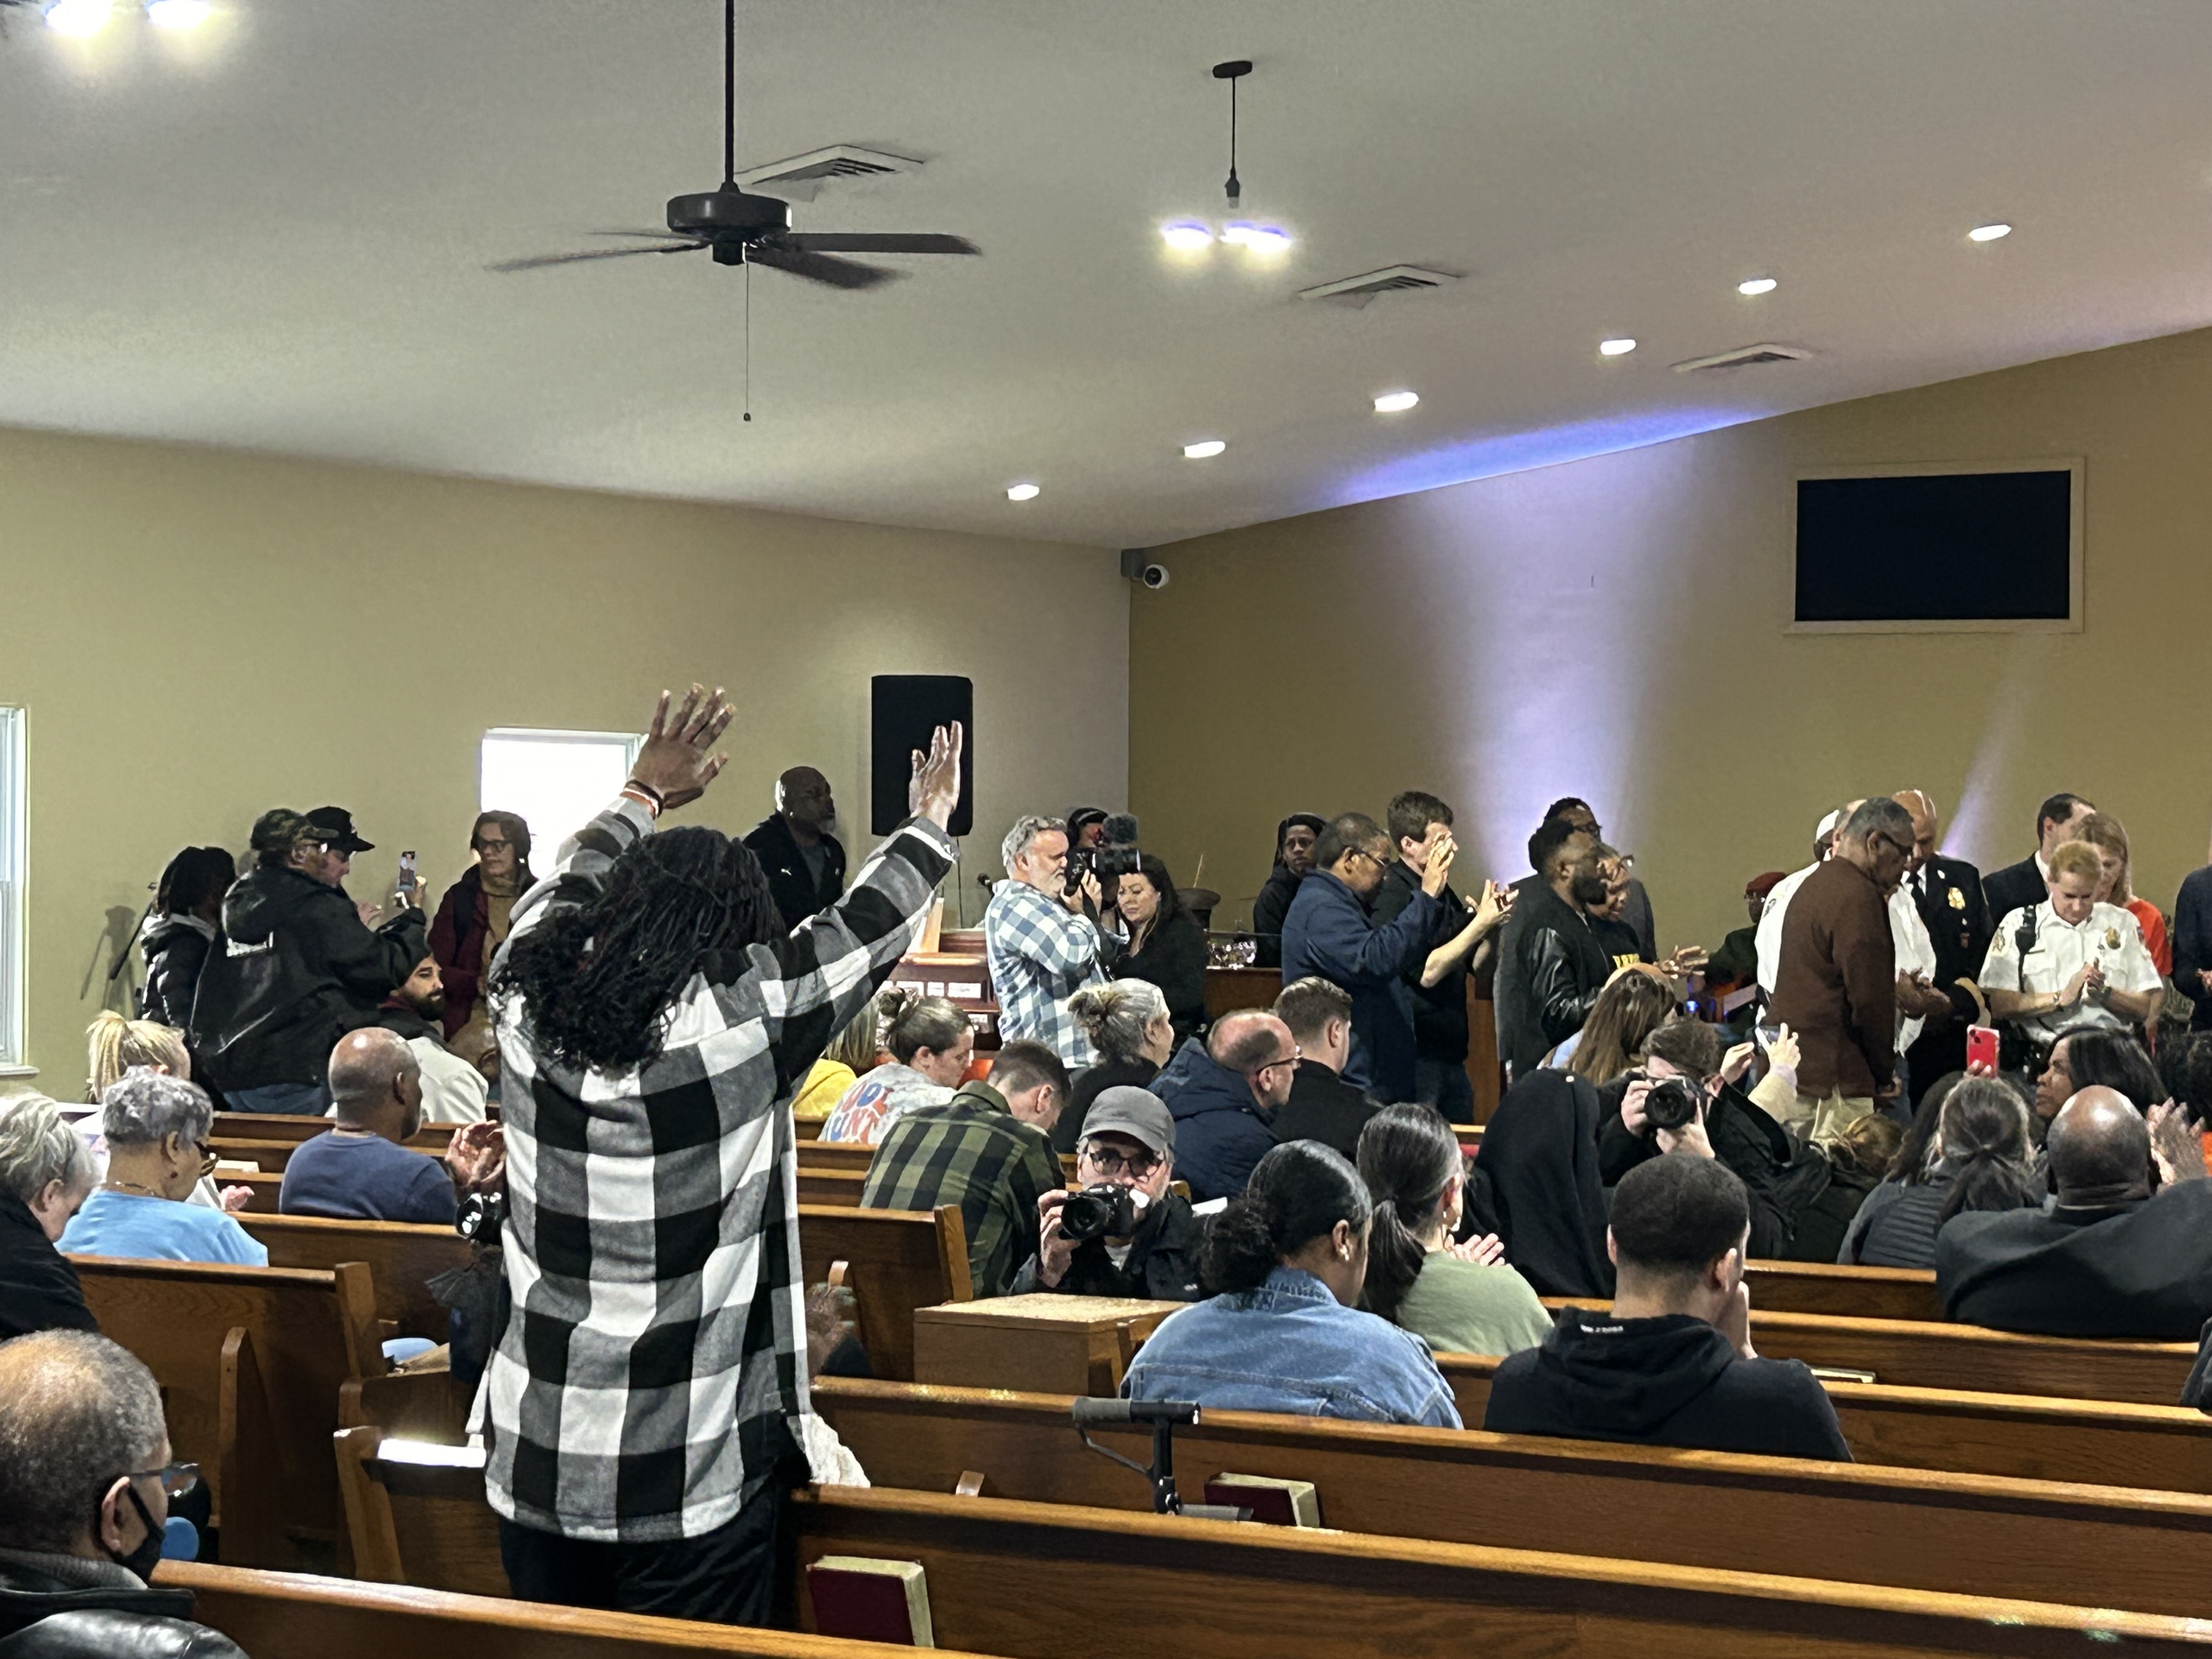 'God be the bridge': Turner Station comes together for prayer in Baltimore